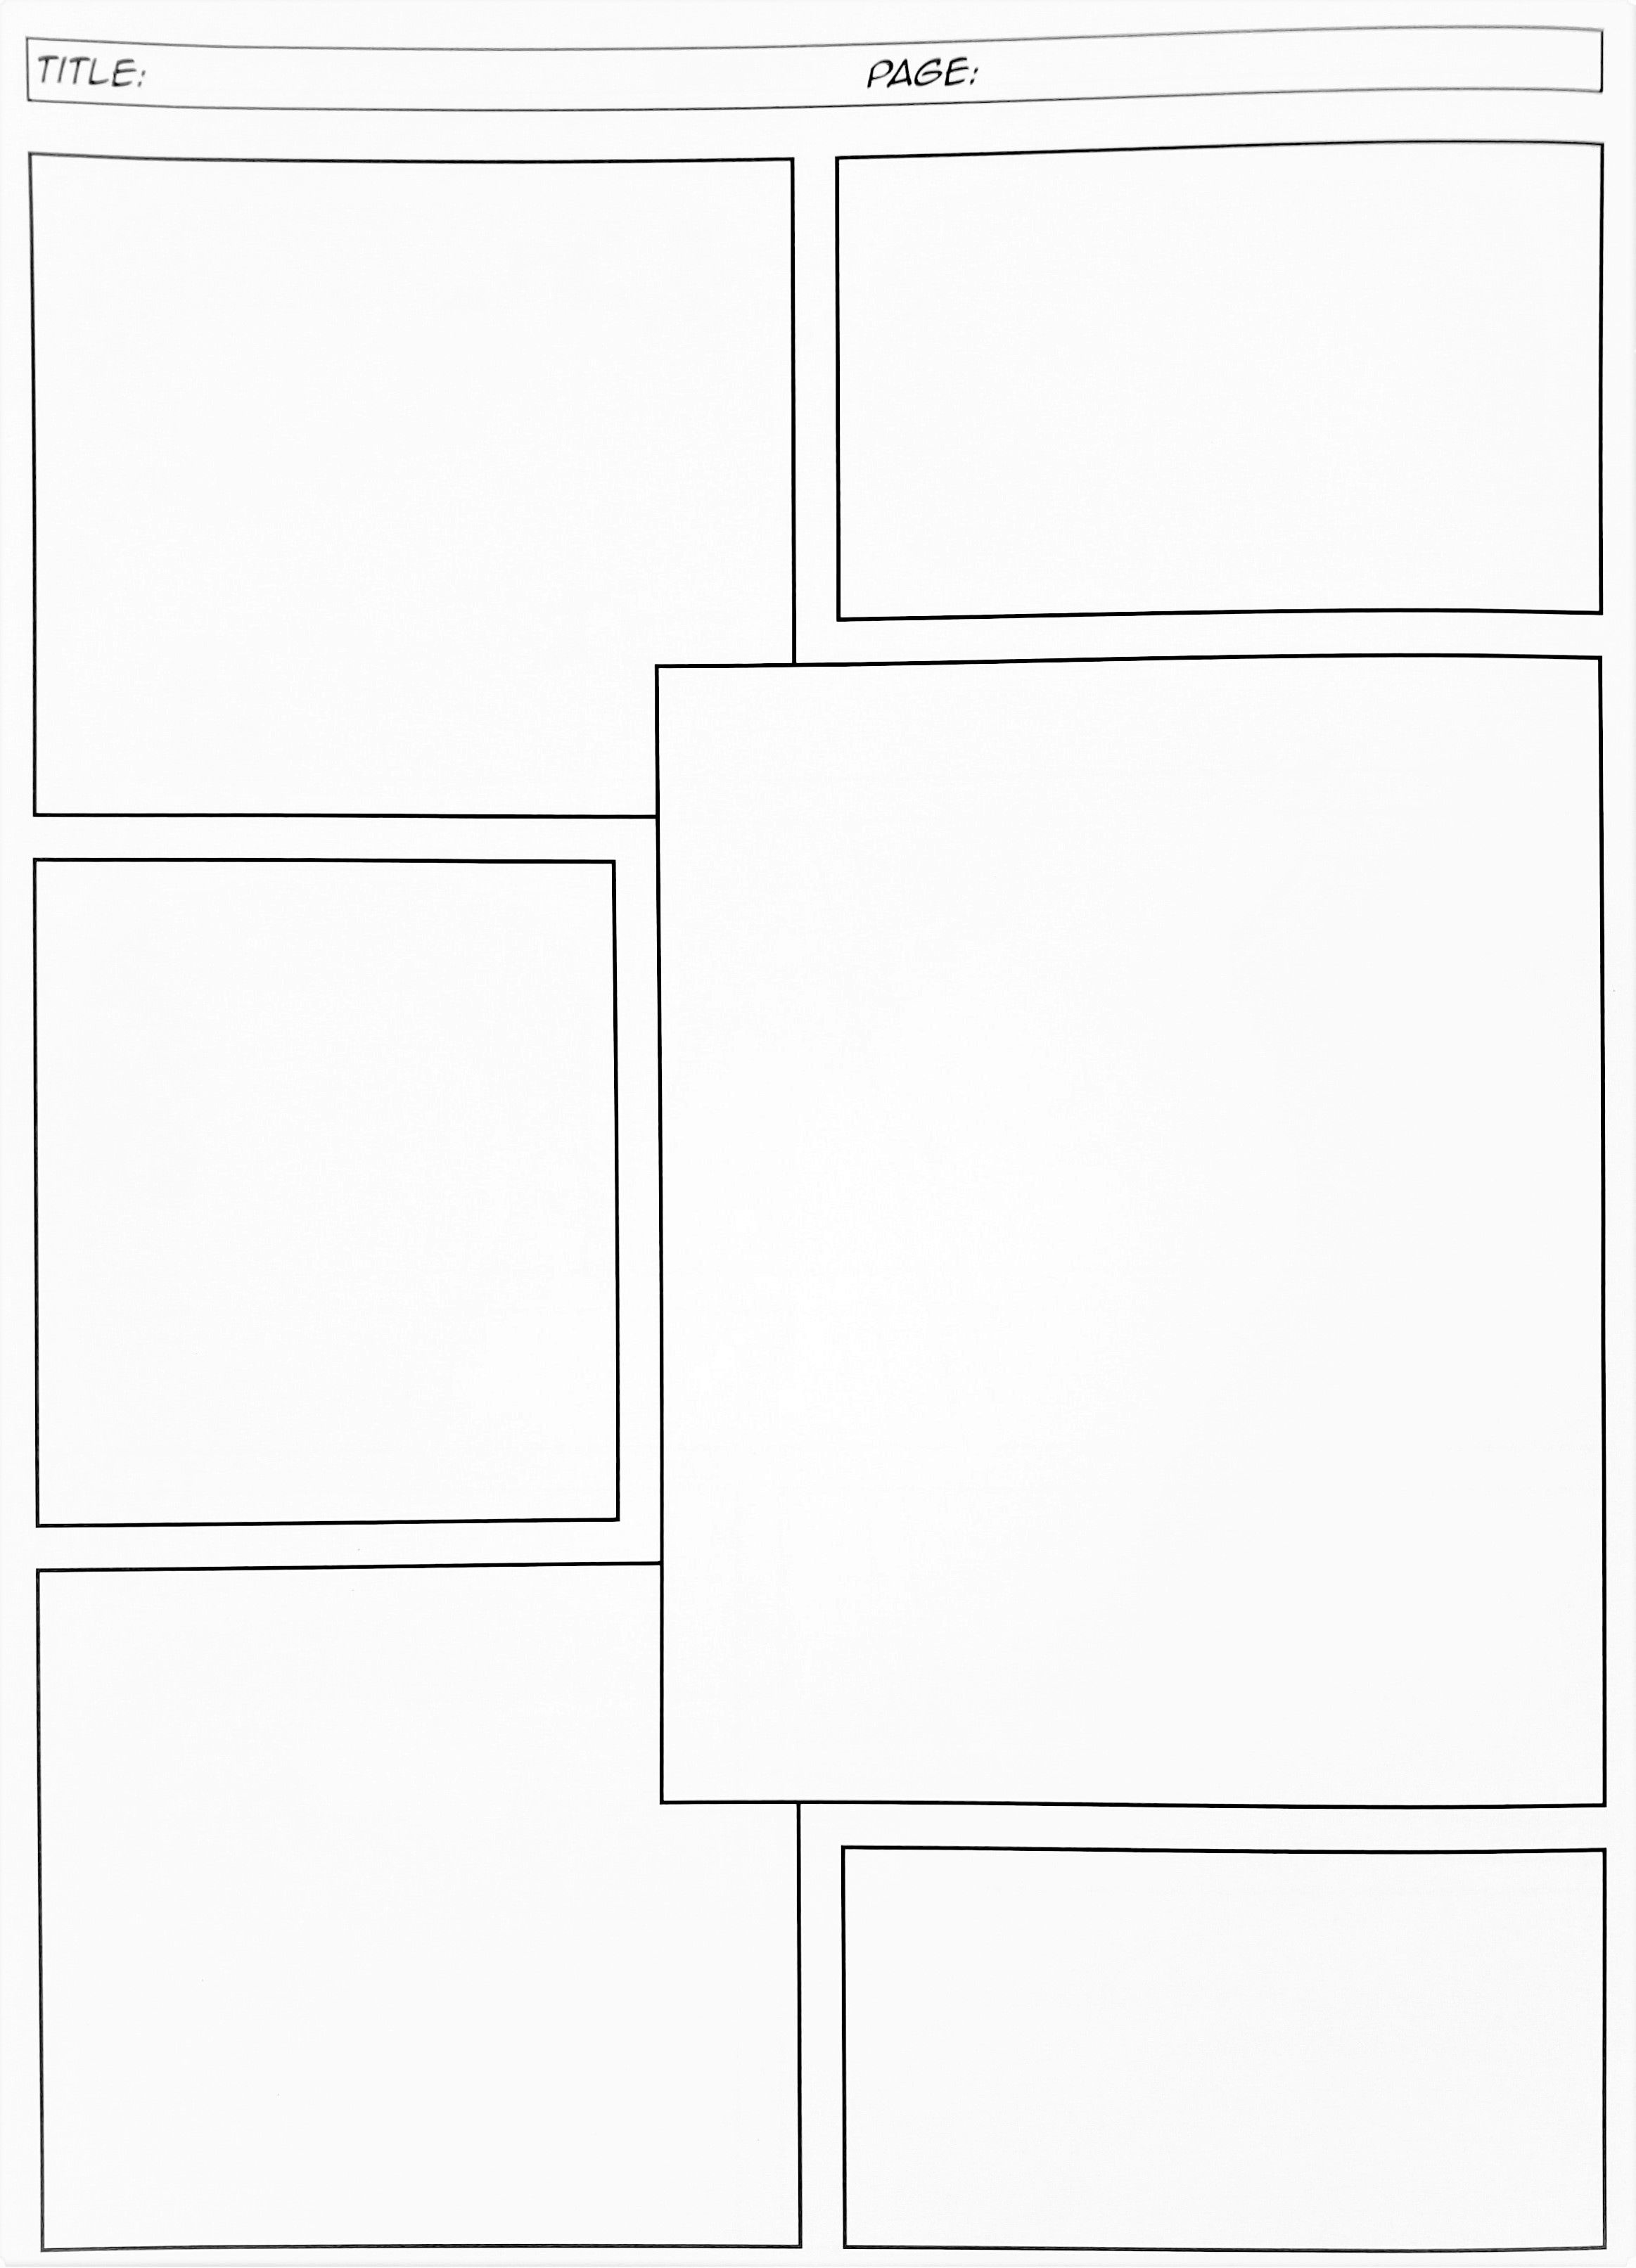 comic-book-challenge-blank-panels-svslearn-forums